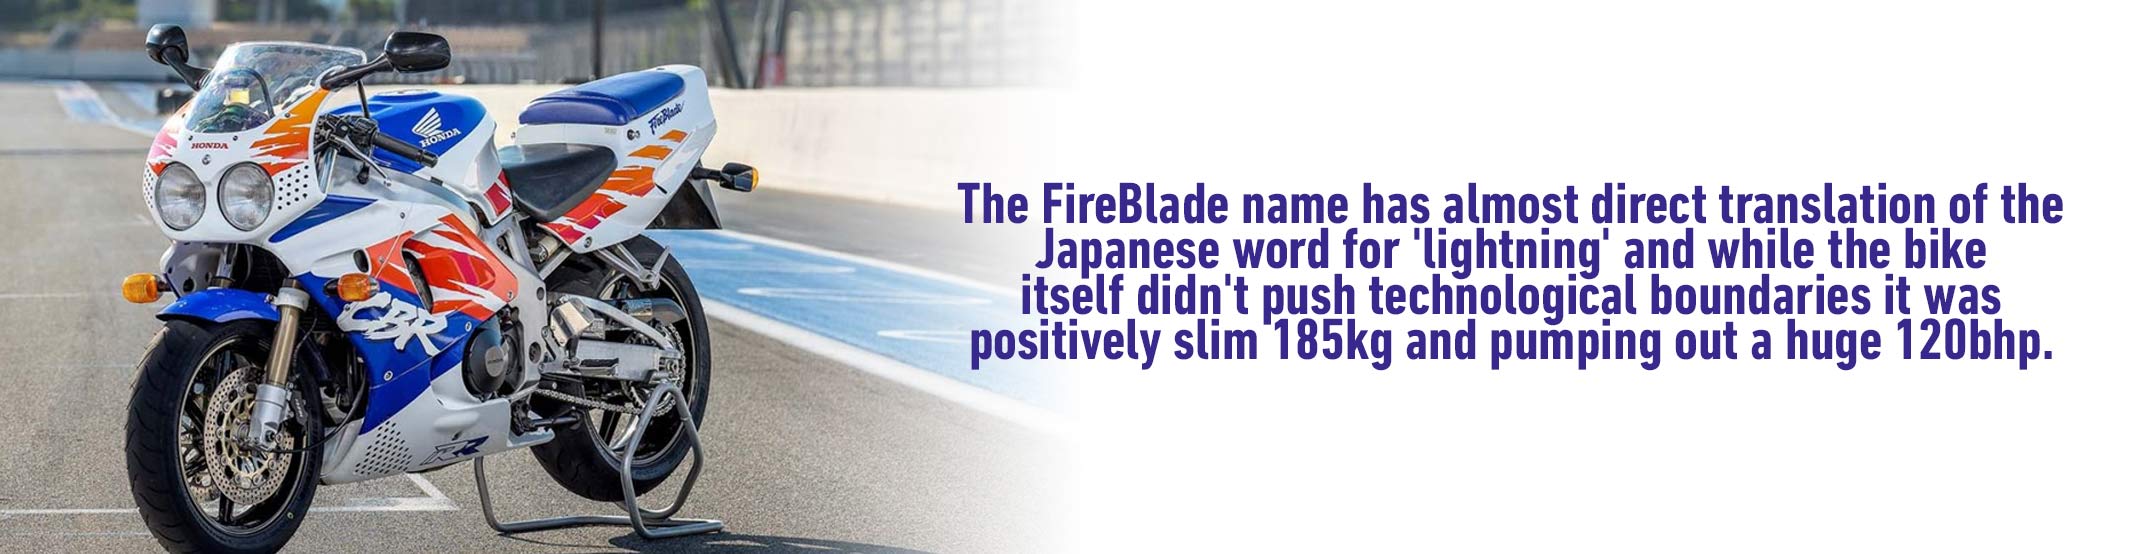 Flame on with the FireBlade - Fireblade CBR1000RR-RR - Original bike and quote